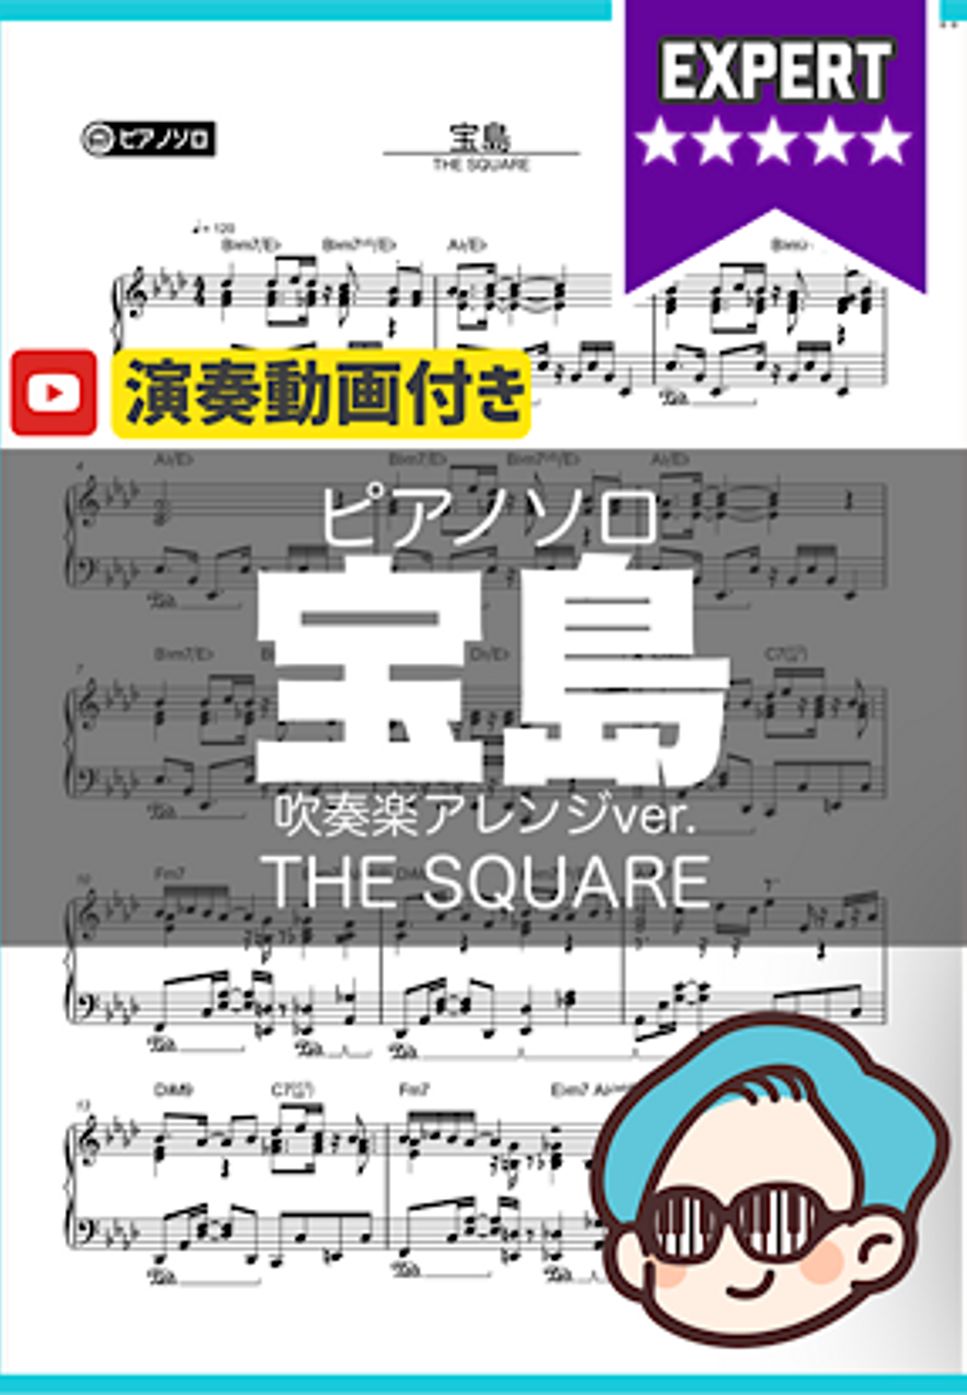 THE SQUARE - 宝島 by シータピアノ